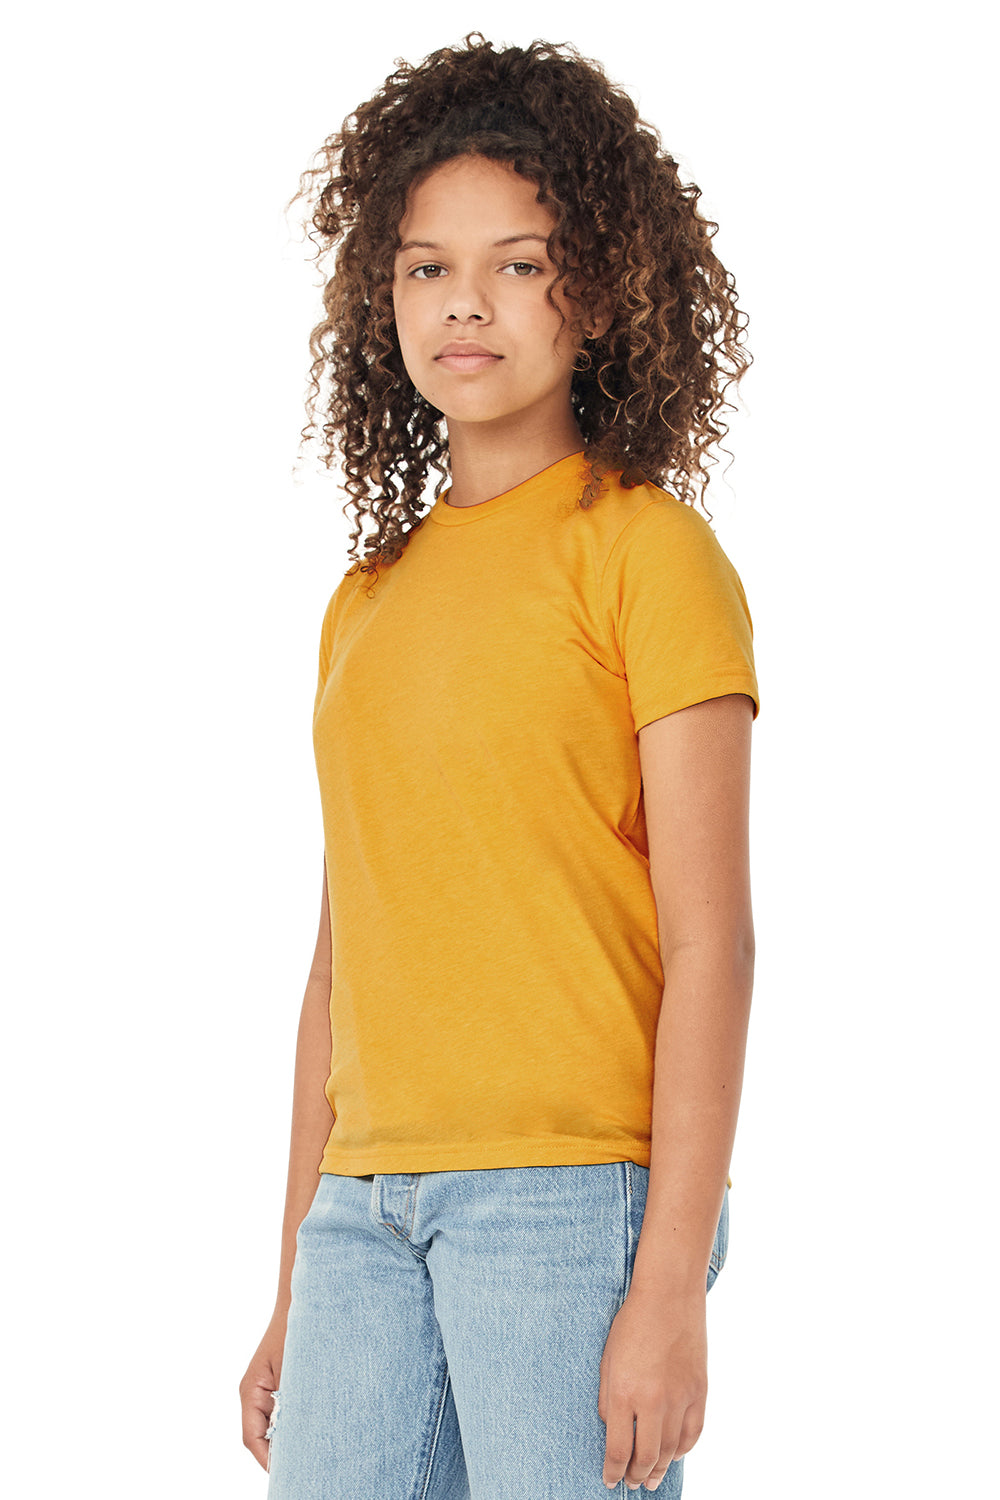 Bella + Canvas 3413Y Youth Short Sleeve Crewneck T-Shirt Mustard Yellow Model 3Q